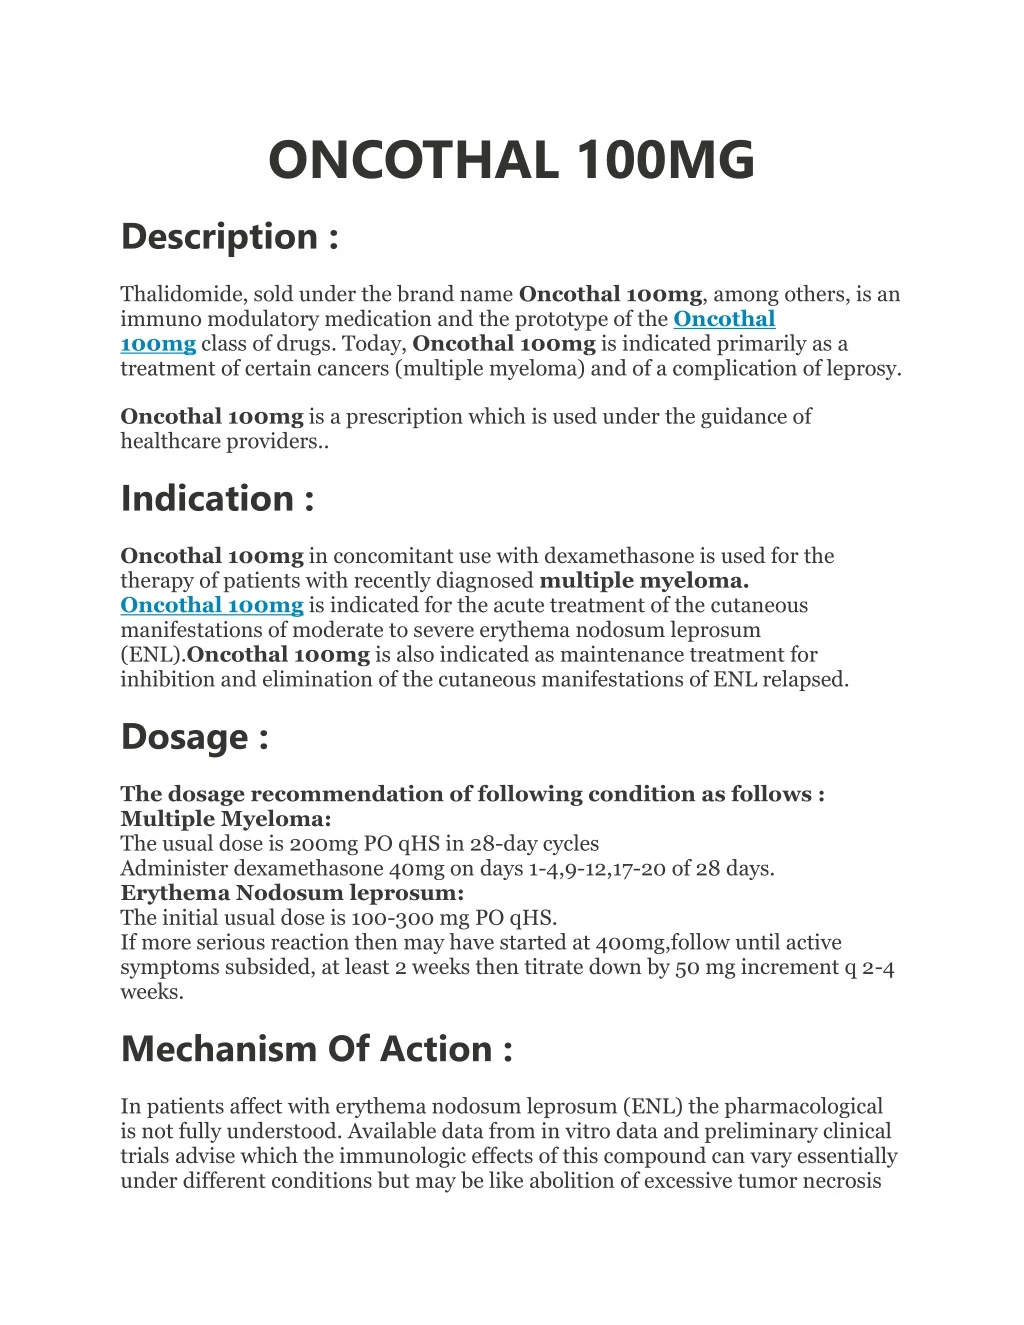 oncothal 100mg description